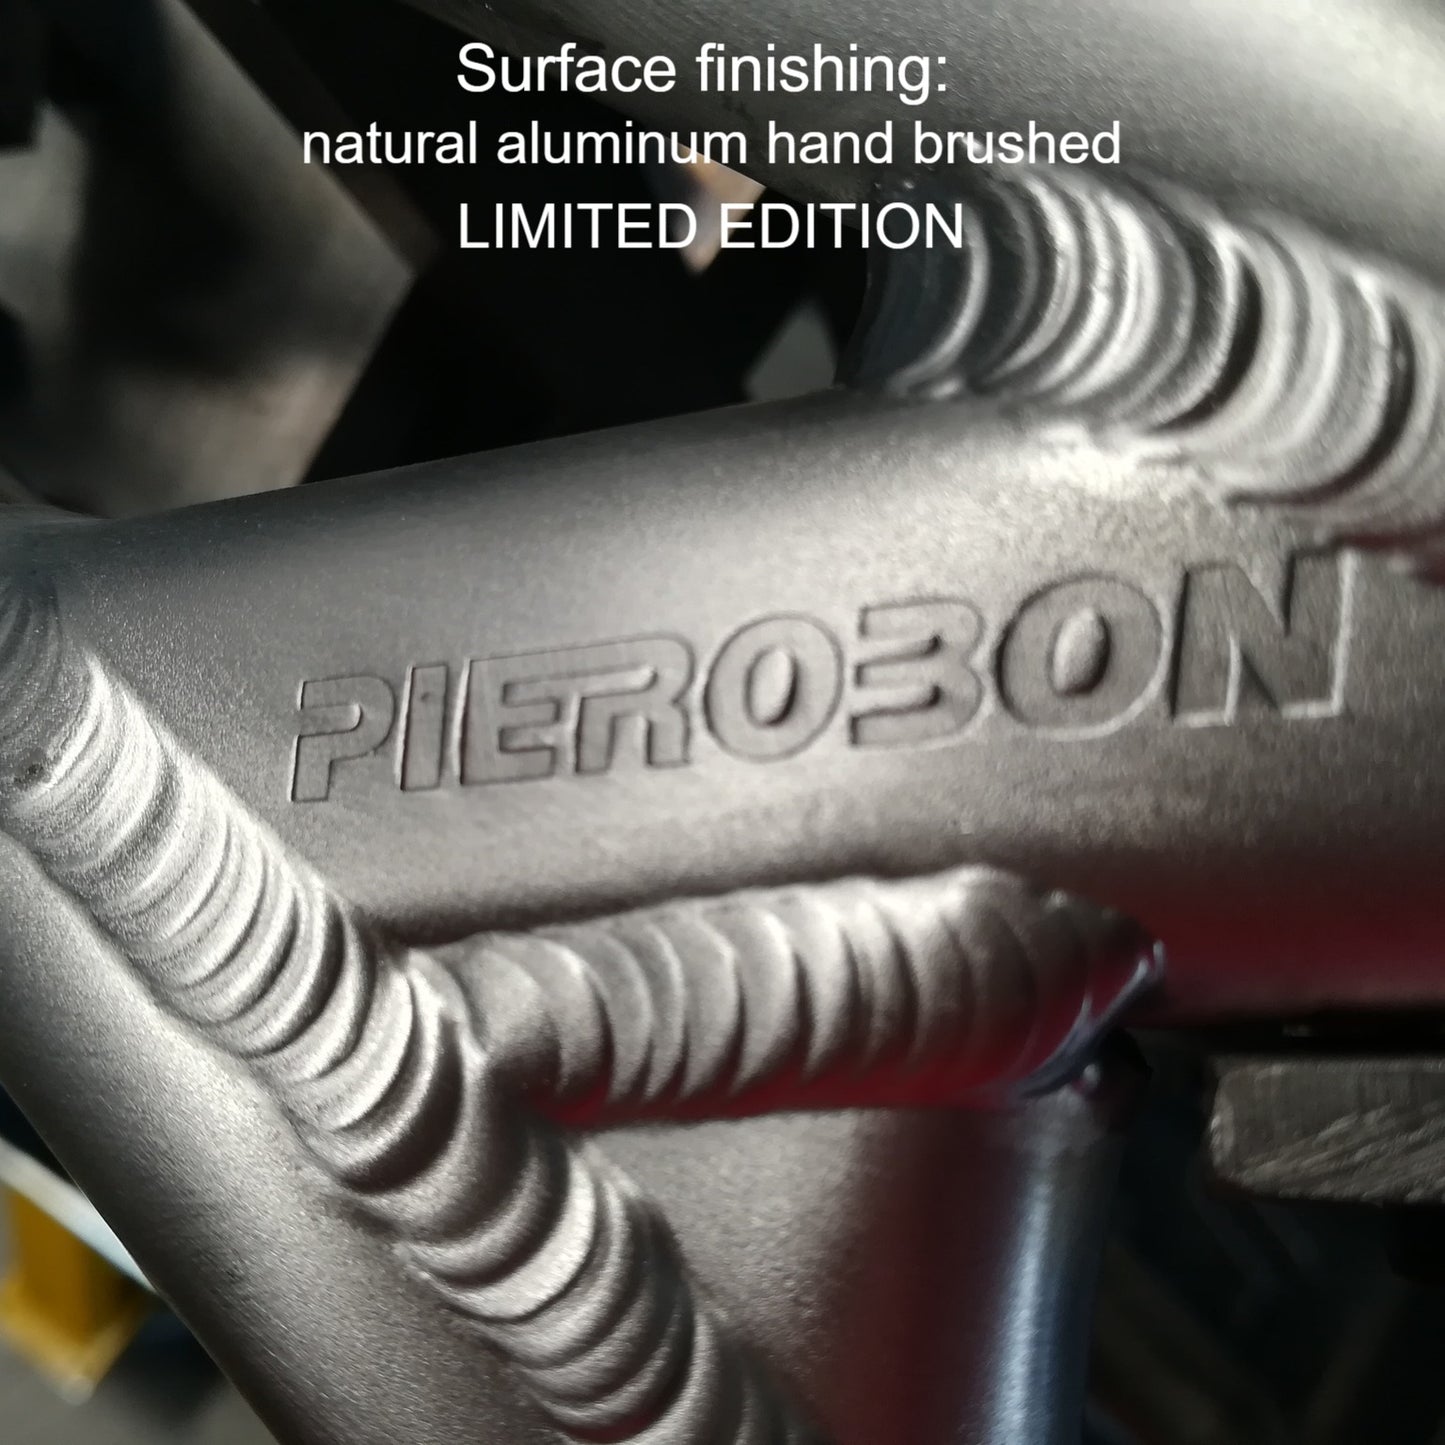 PIEROBON DUCATI Panigale V4/V4R STK ultralight aluminum racing rear subframe Pierobon Ducati Panigale seat rail